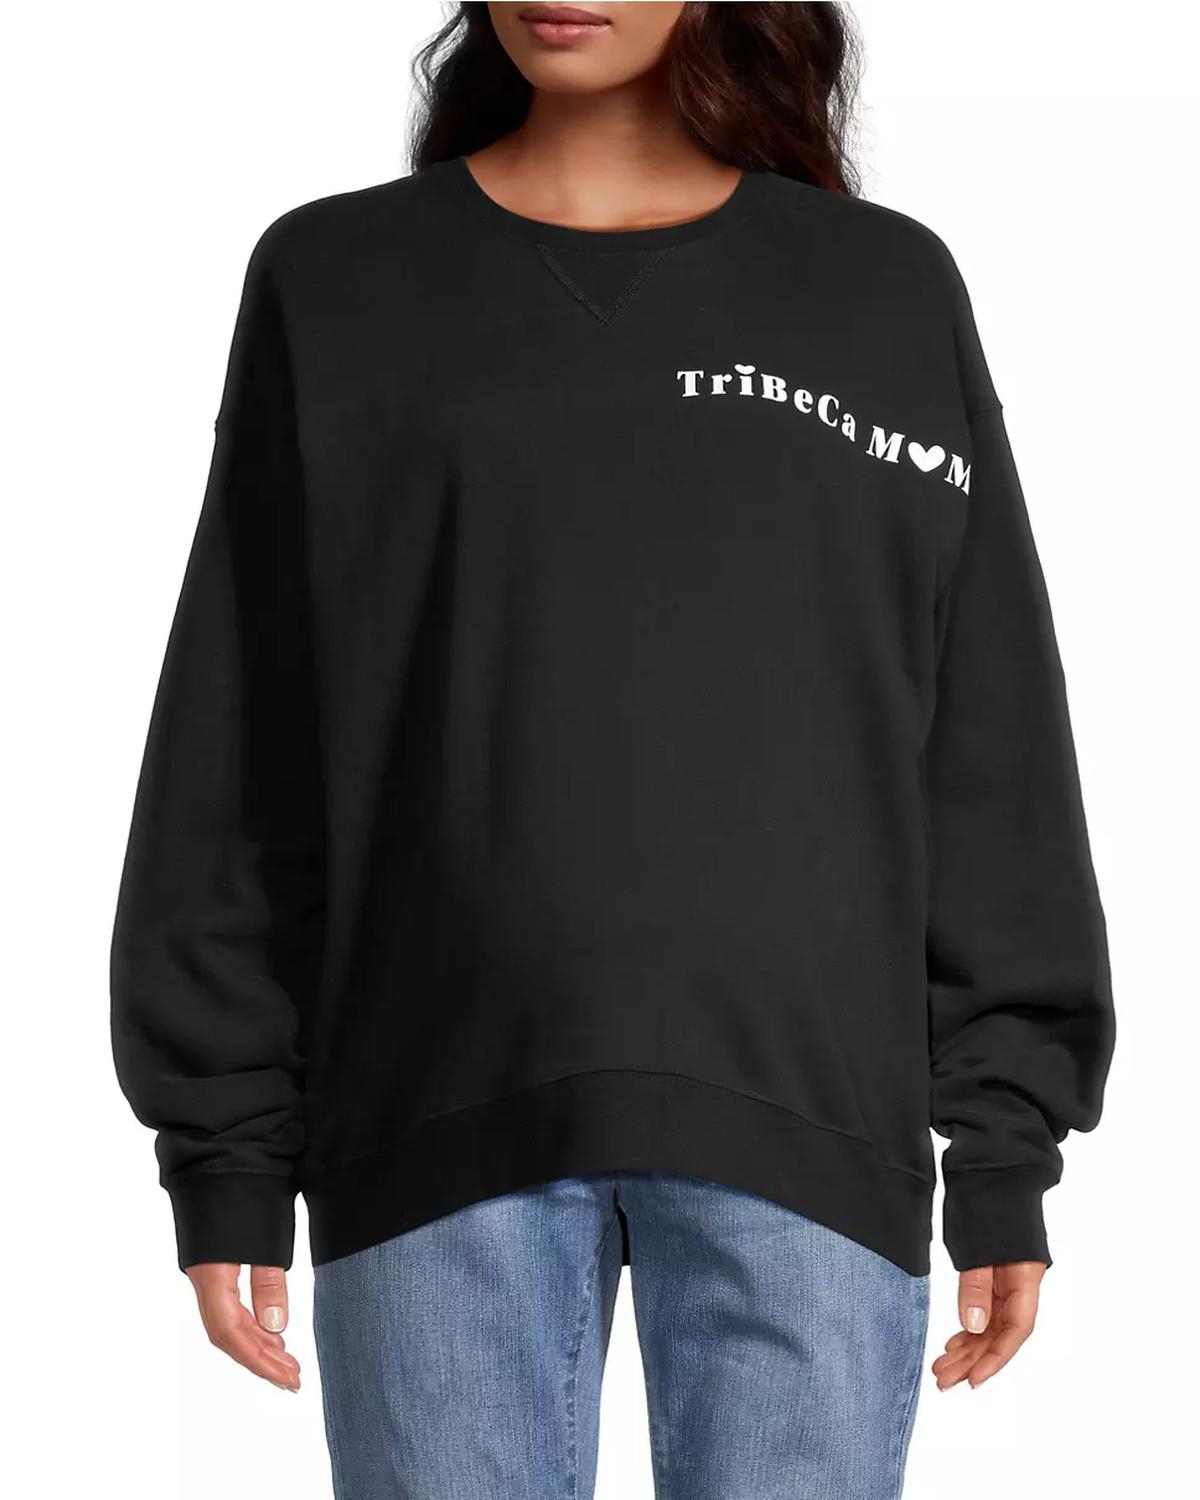 Women's Tribeca Mom Sweatshirt - Black